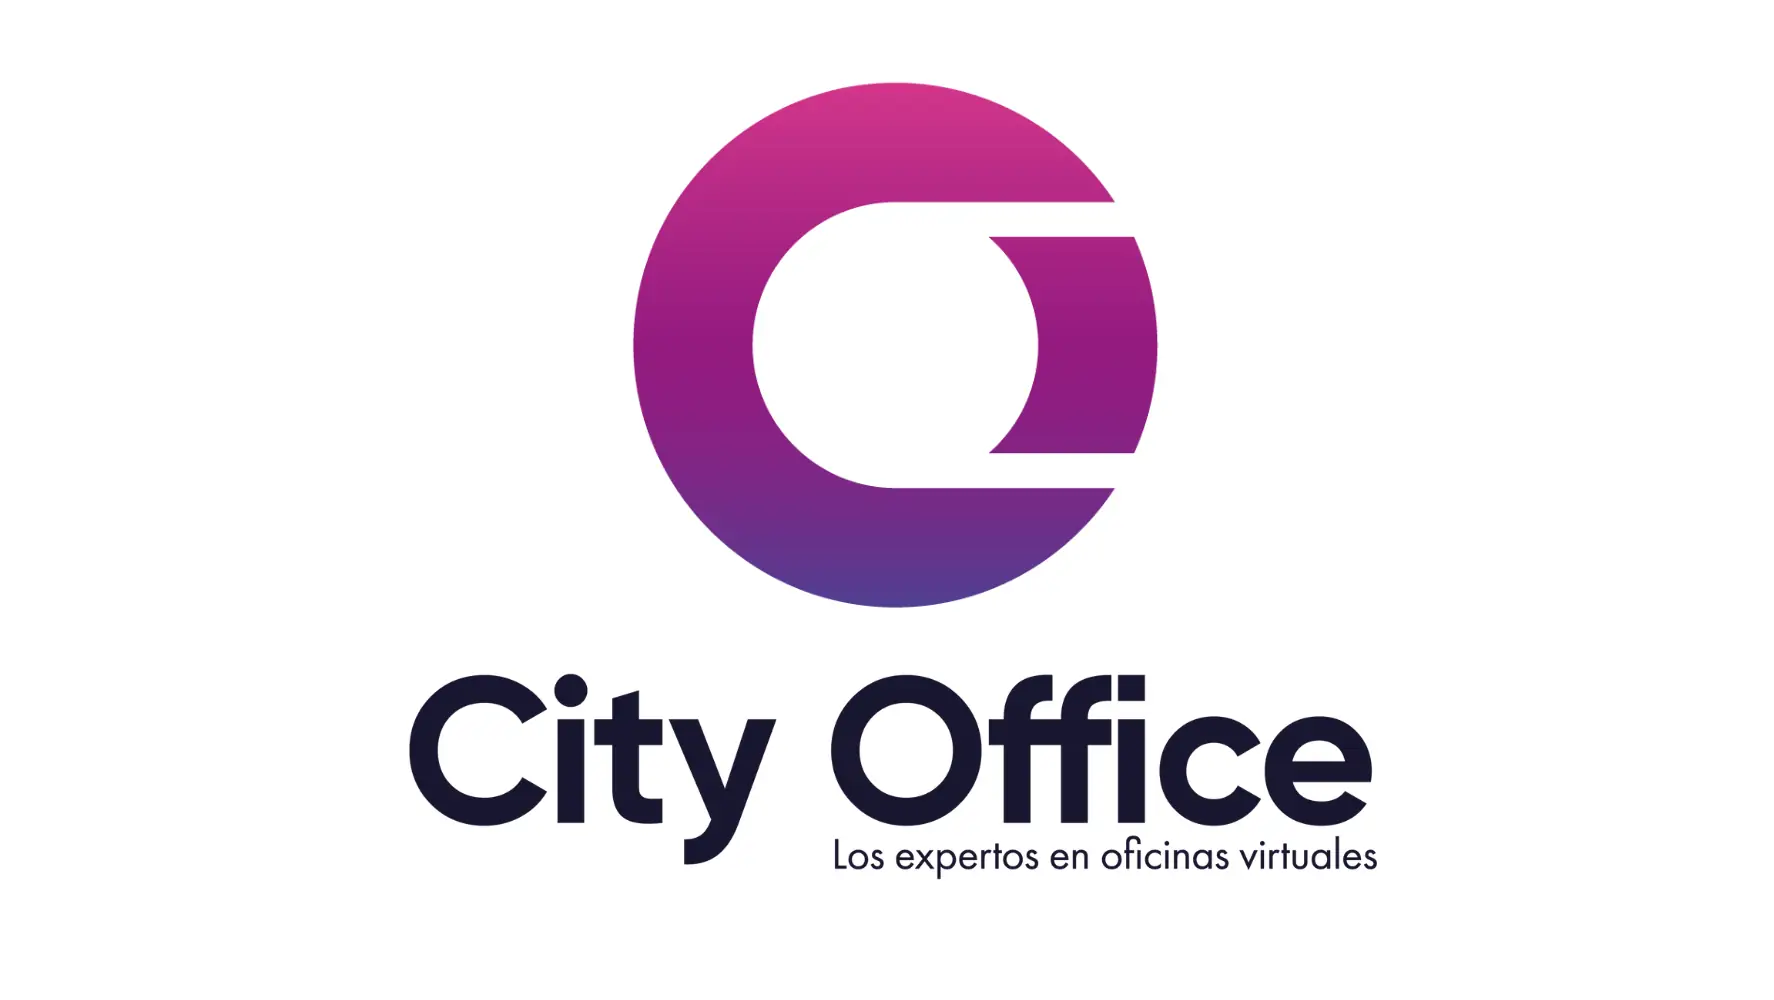 (c) Cityoffice.com.mx